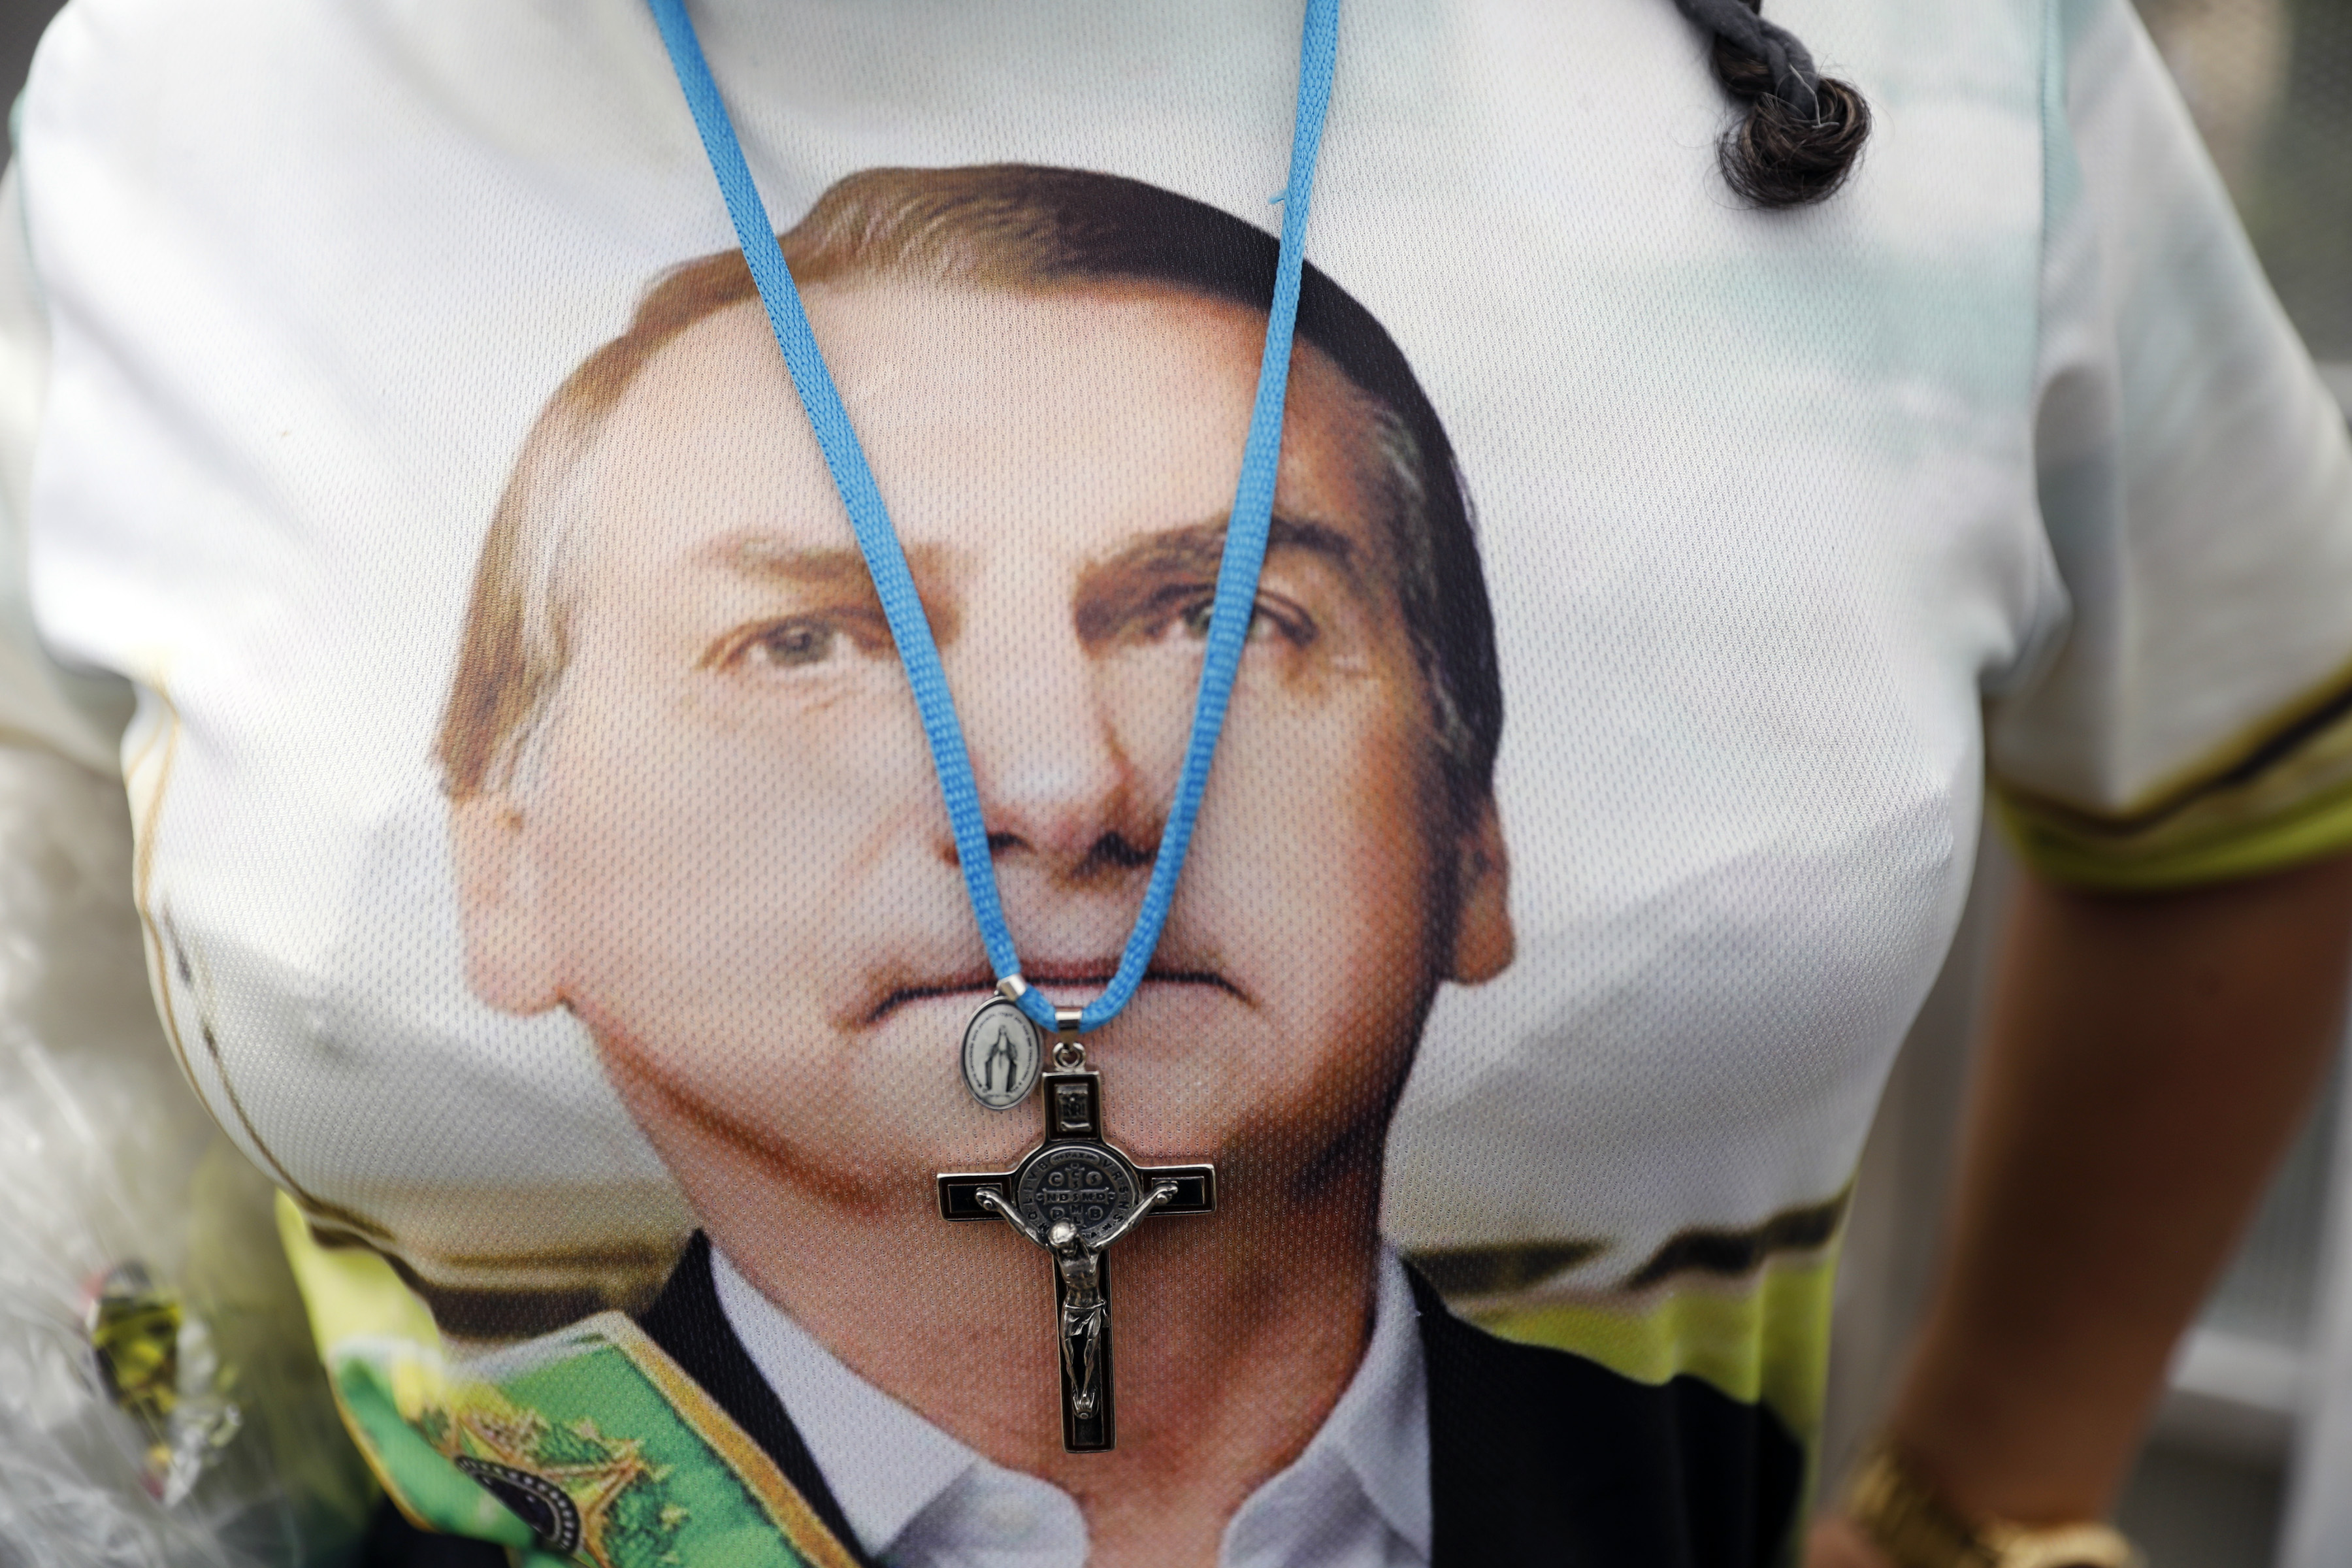 A supporter of Brazil's President Jair Bolsonaro wears a crucifix necklace over a shirt with Bolsonaro’s likeness prior to Bolsonaro's inauguration, in Brasilia, Brazil, on Jan. 1, 2019. (AP Photo/Silvia Izquierdo)